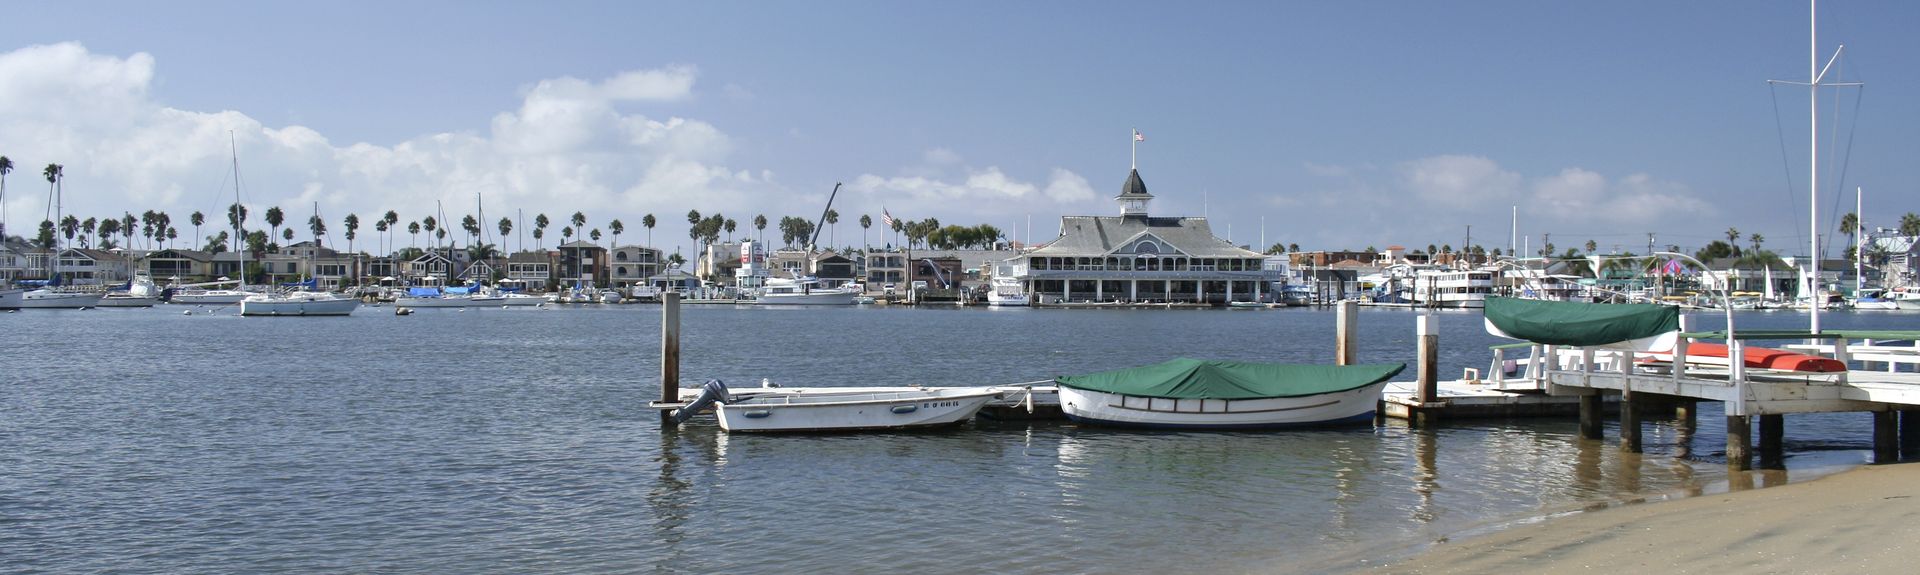 Vrbo Balboa Island Newport Beach Vacation Rentals House